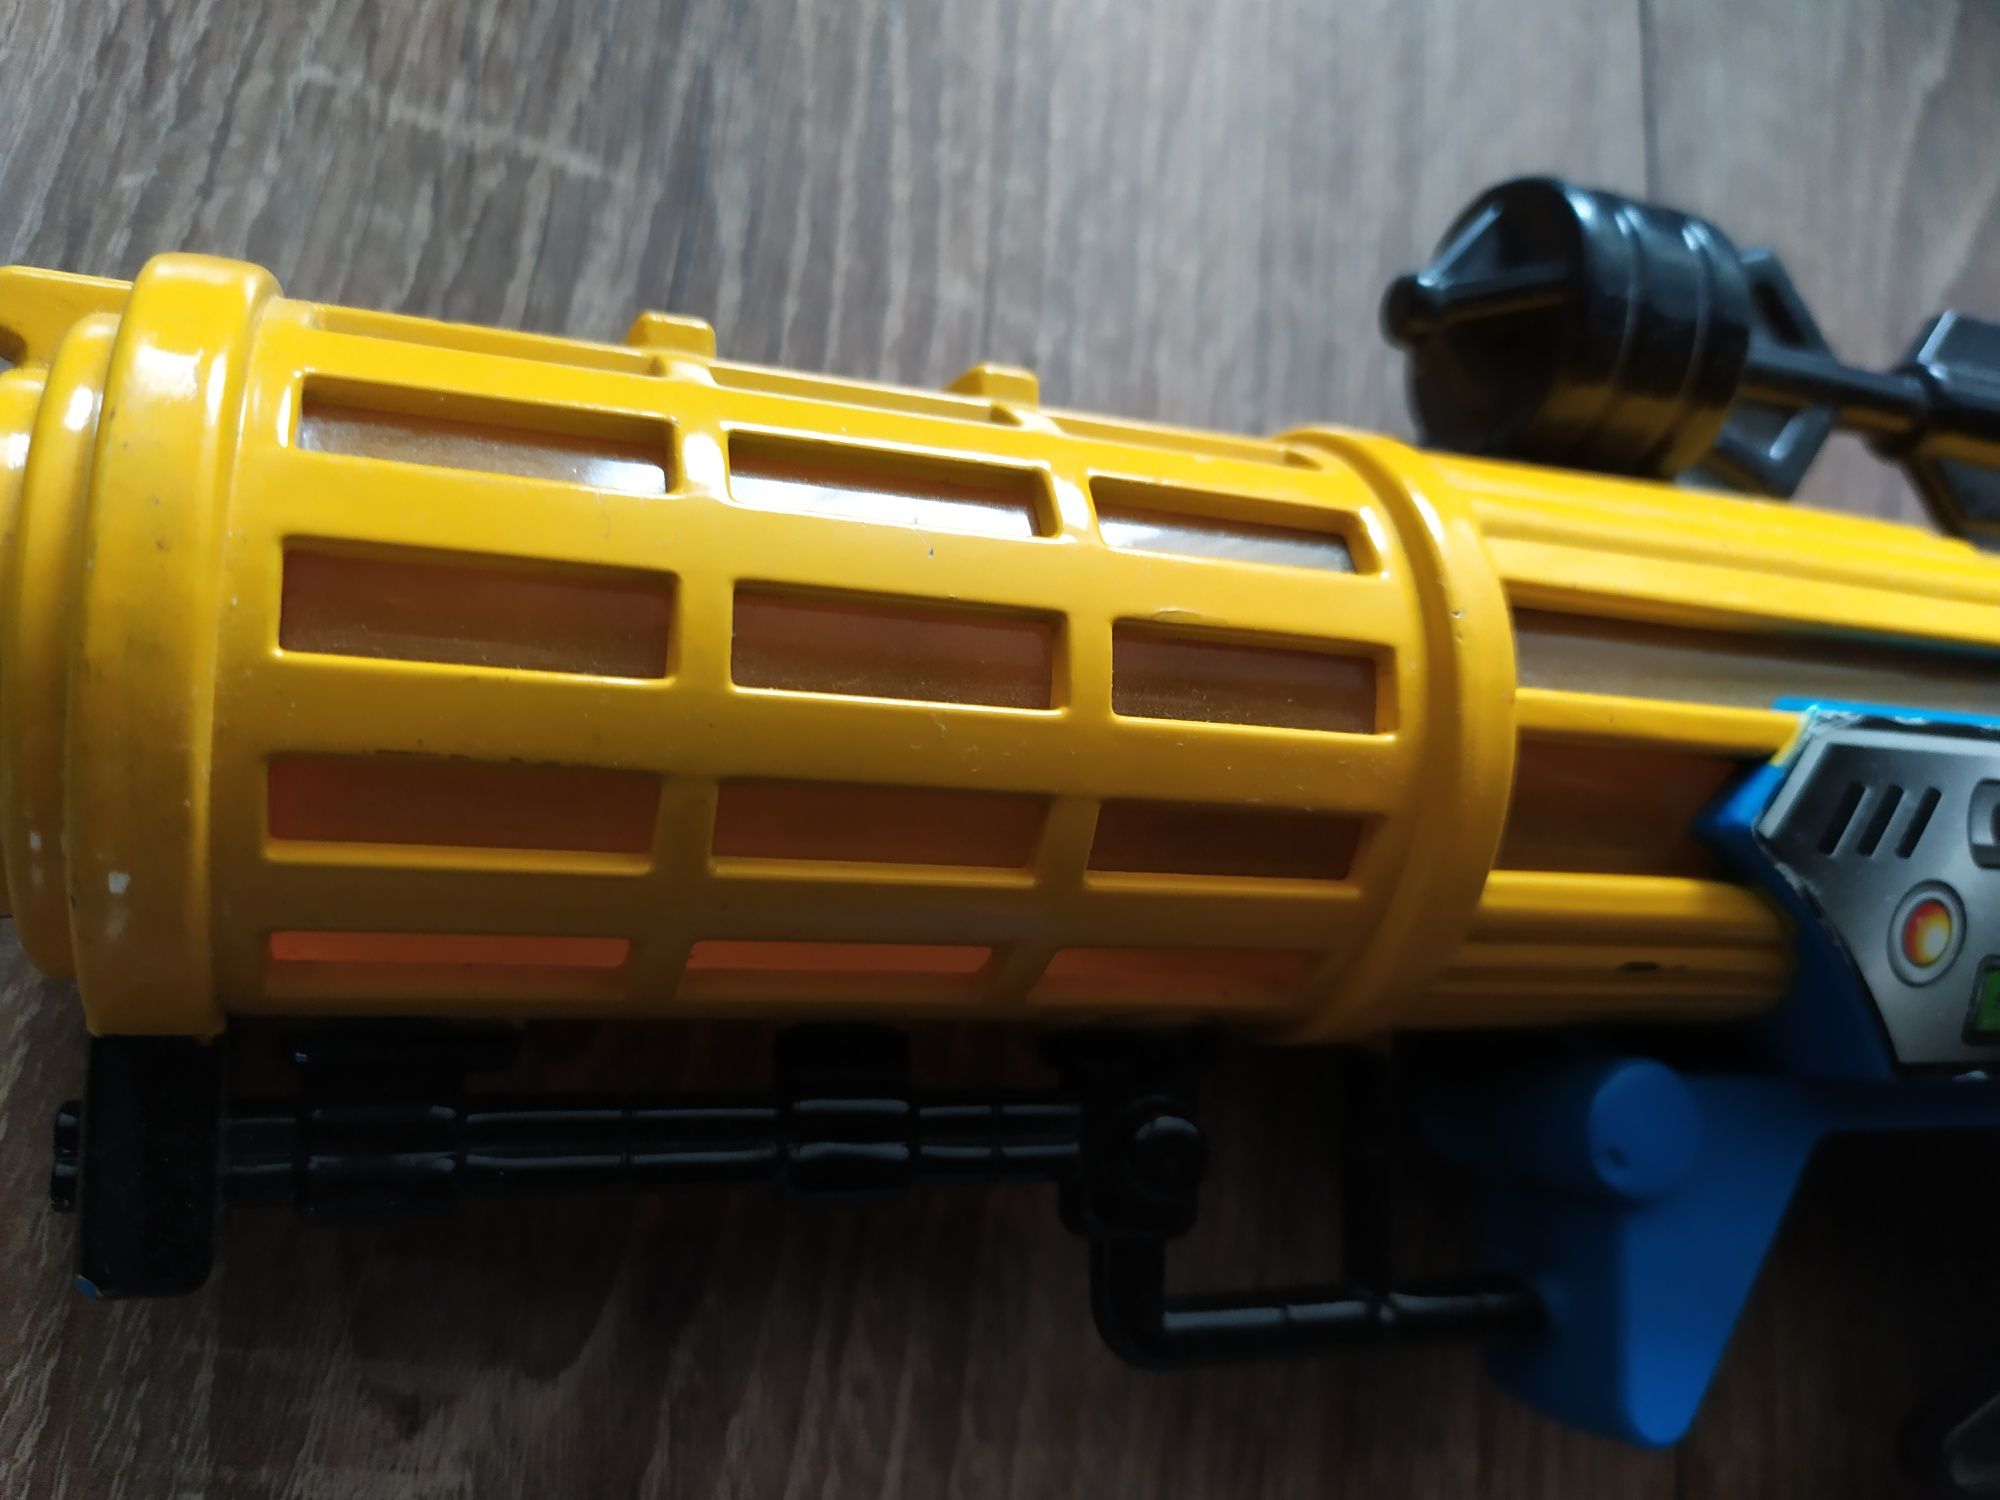 Pistolet plastikowy Flash Gun zabawka 3+ błyska strzela